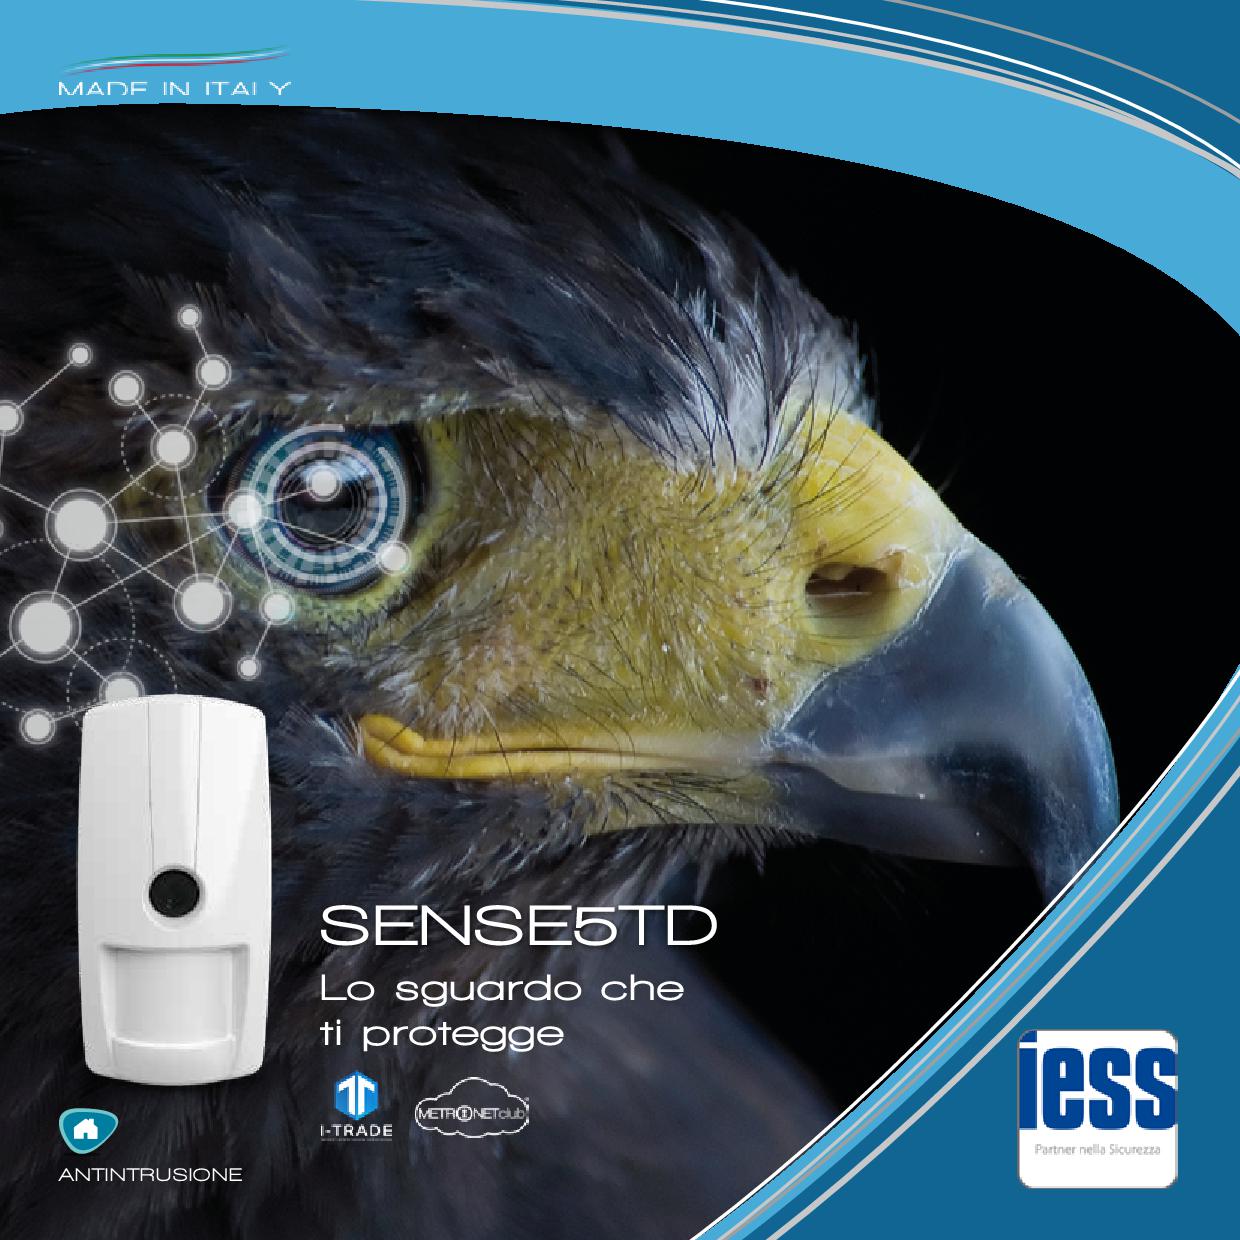 NOVITA’ IESS: Sensore SENSE5TD,lo sguardo che ti protegge!